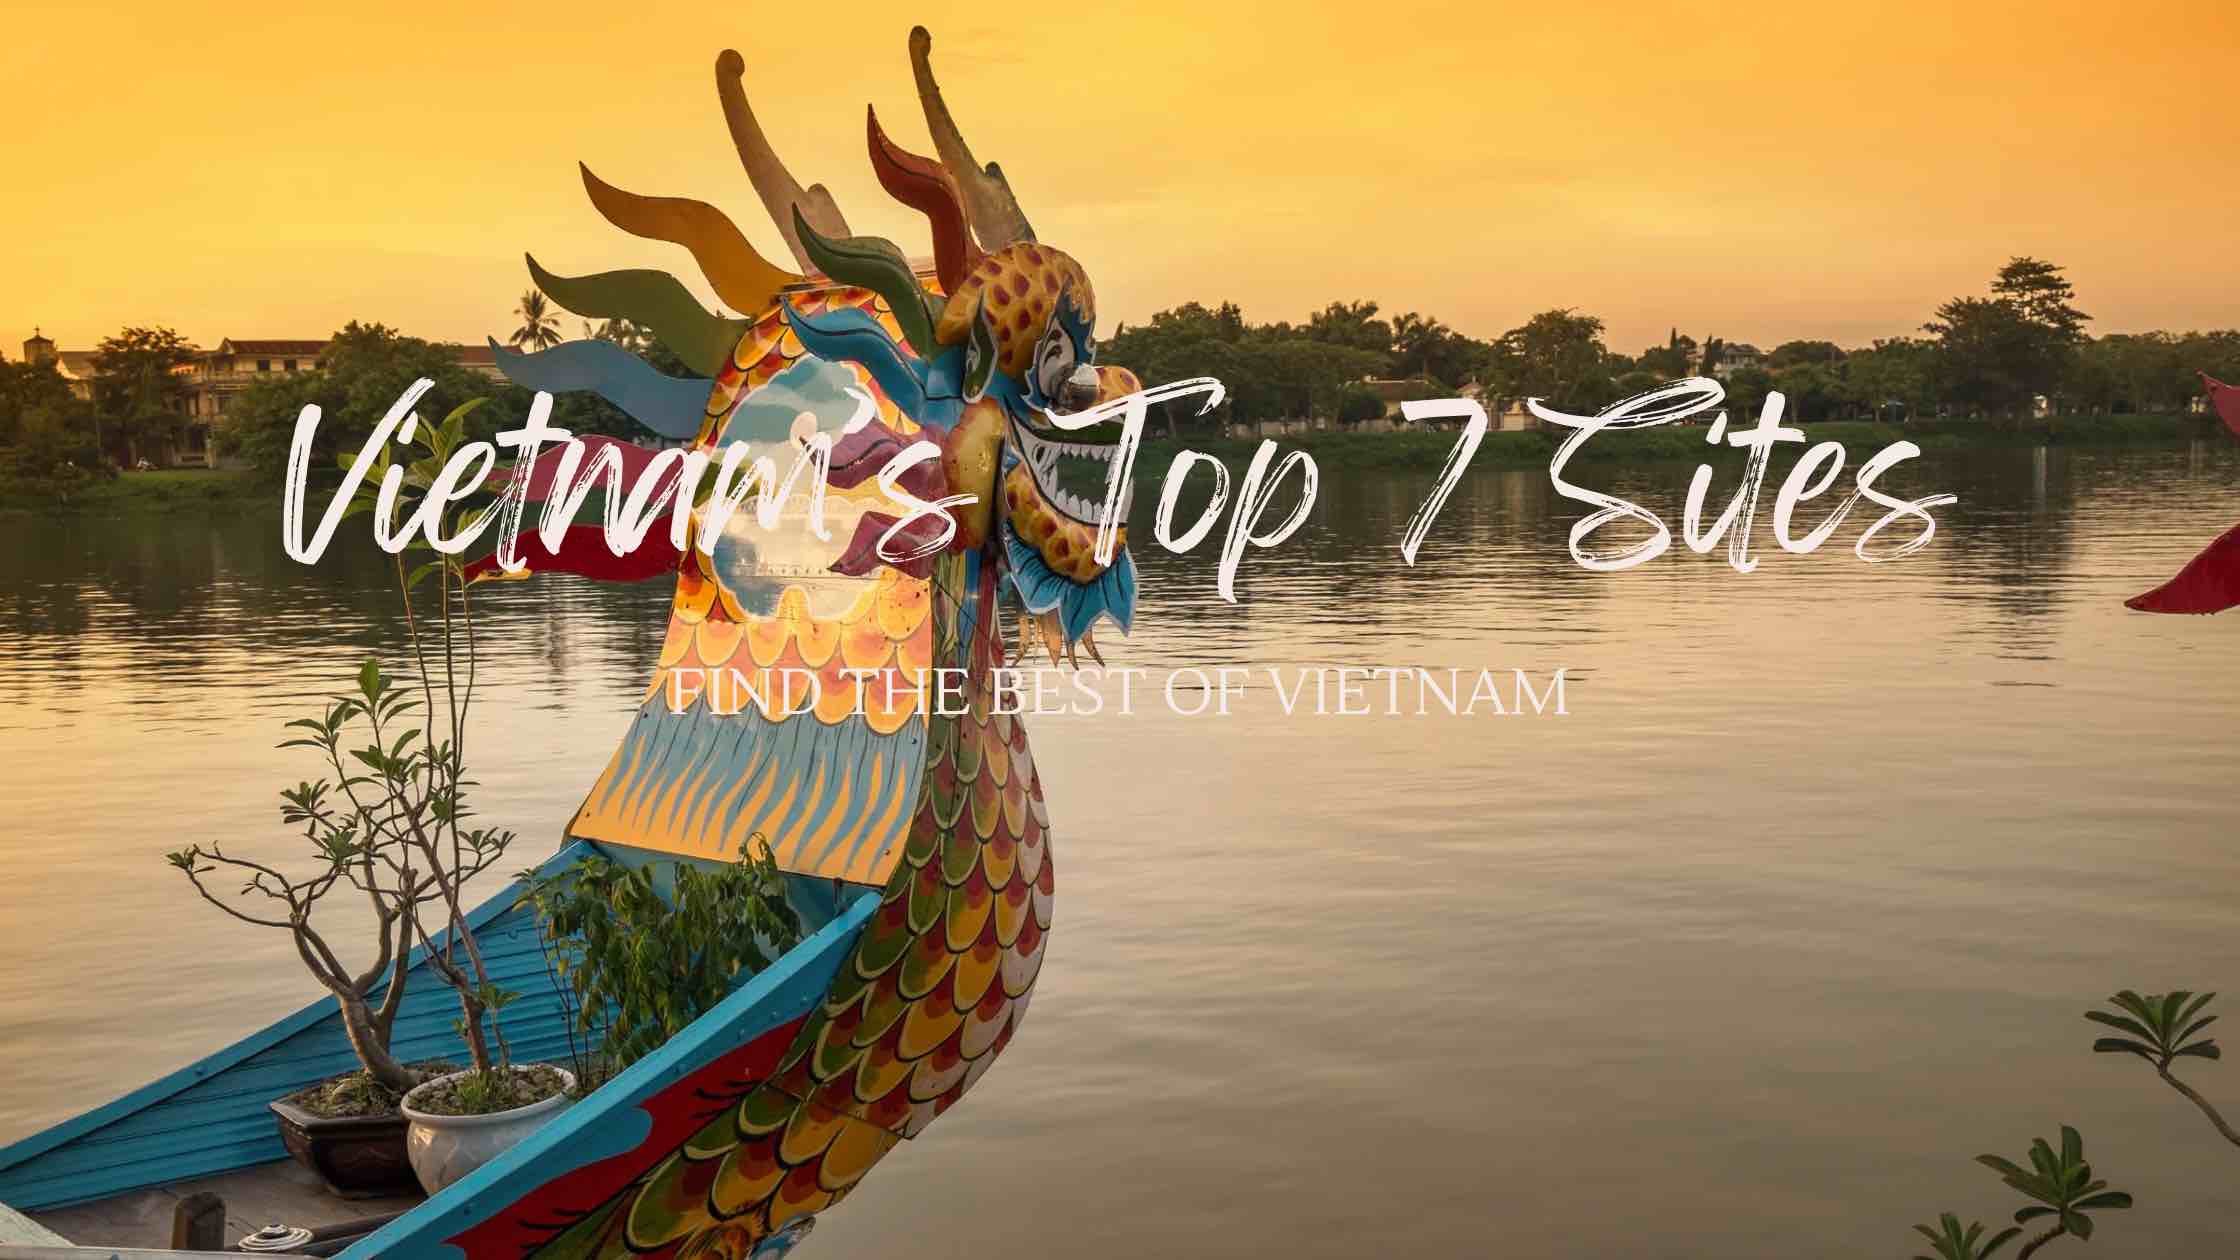 Vietnam’s top 7 spots